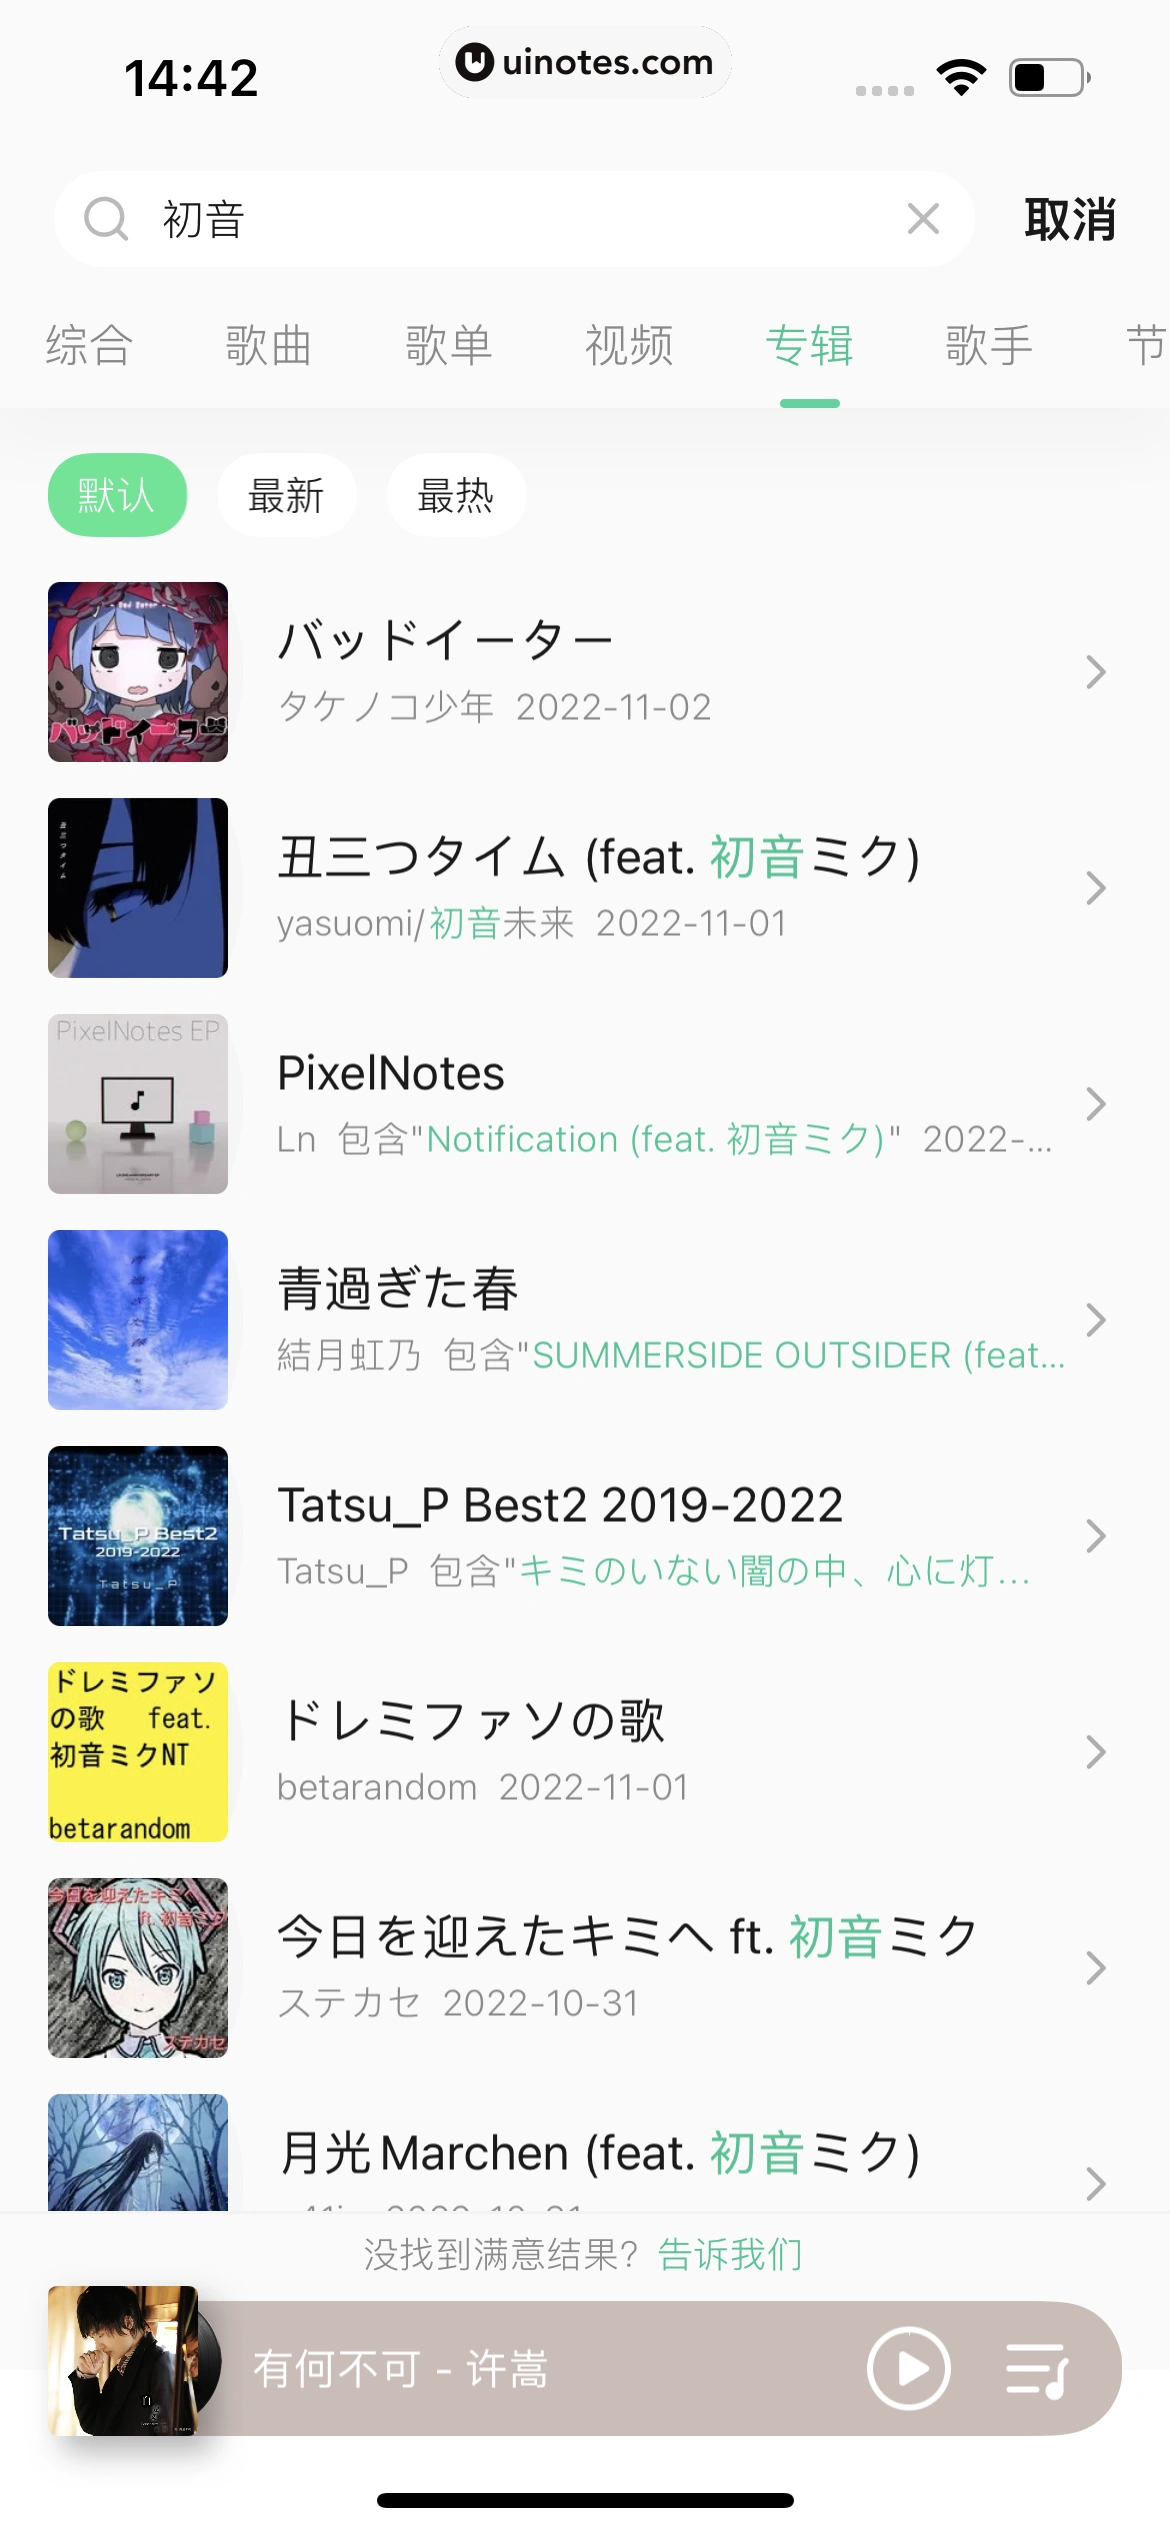 QQ音乐 App 截图 140 - UI Notes